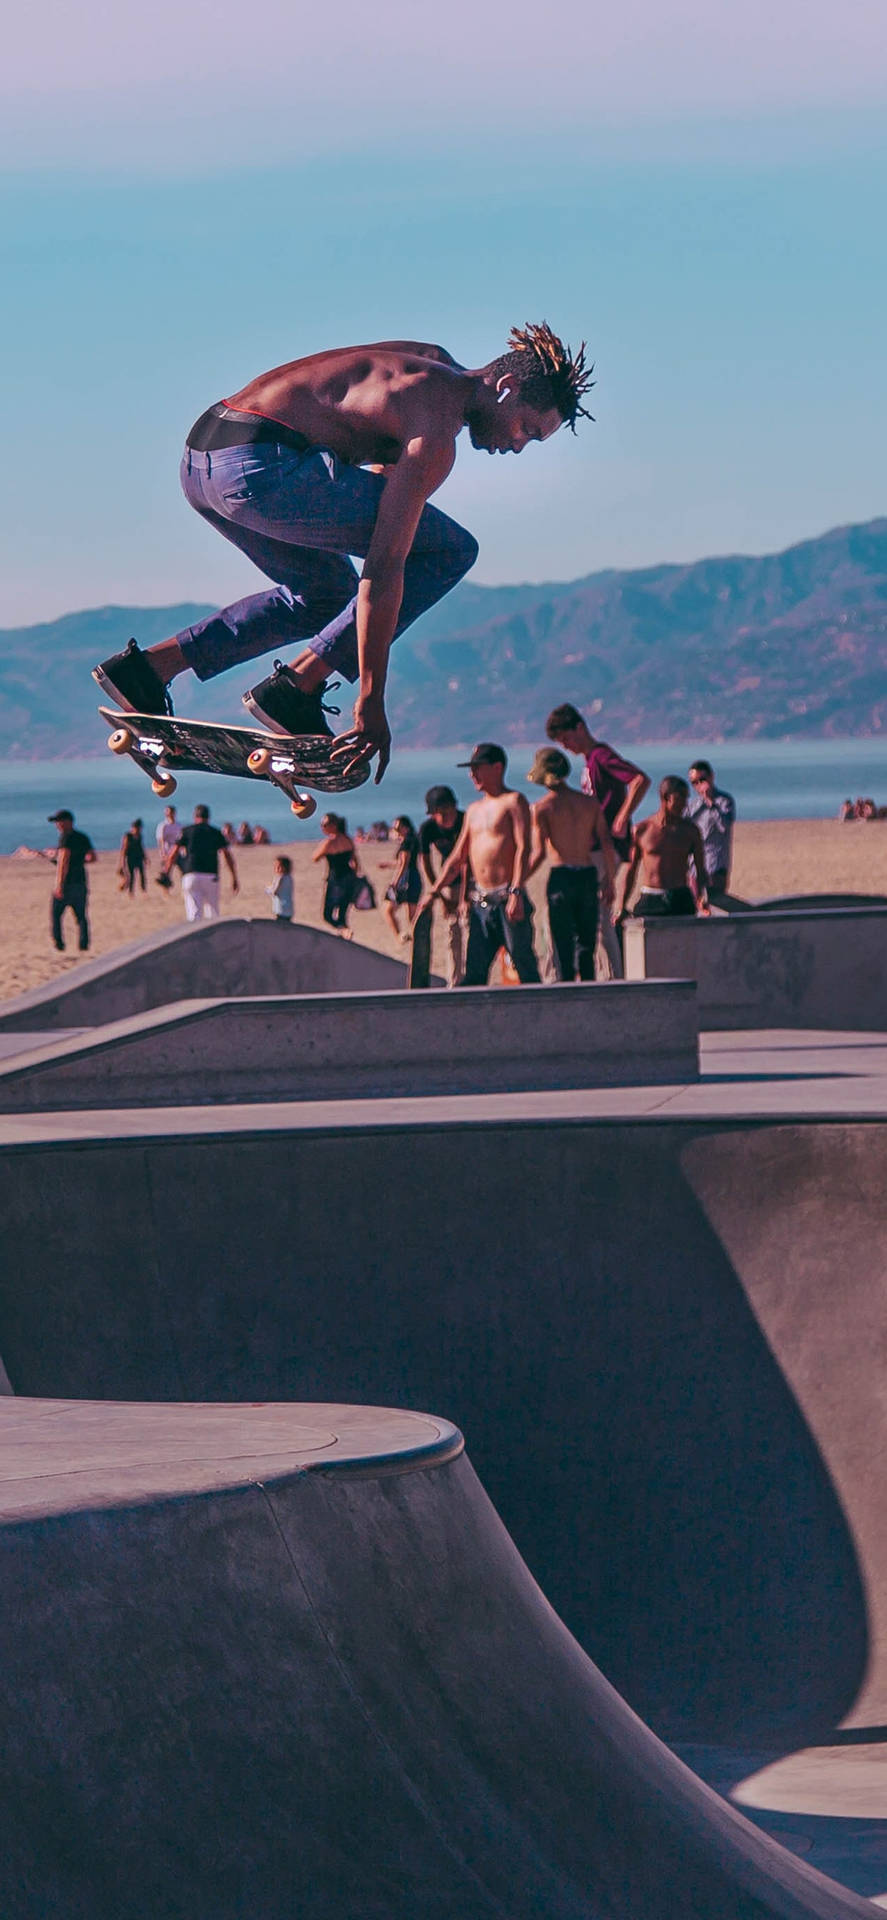 Skater Without Shirt Skateboard iPhone Wallpaper